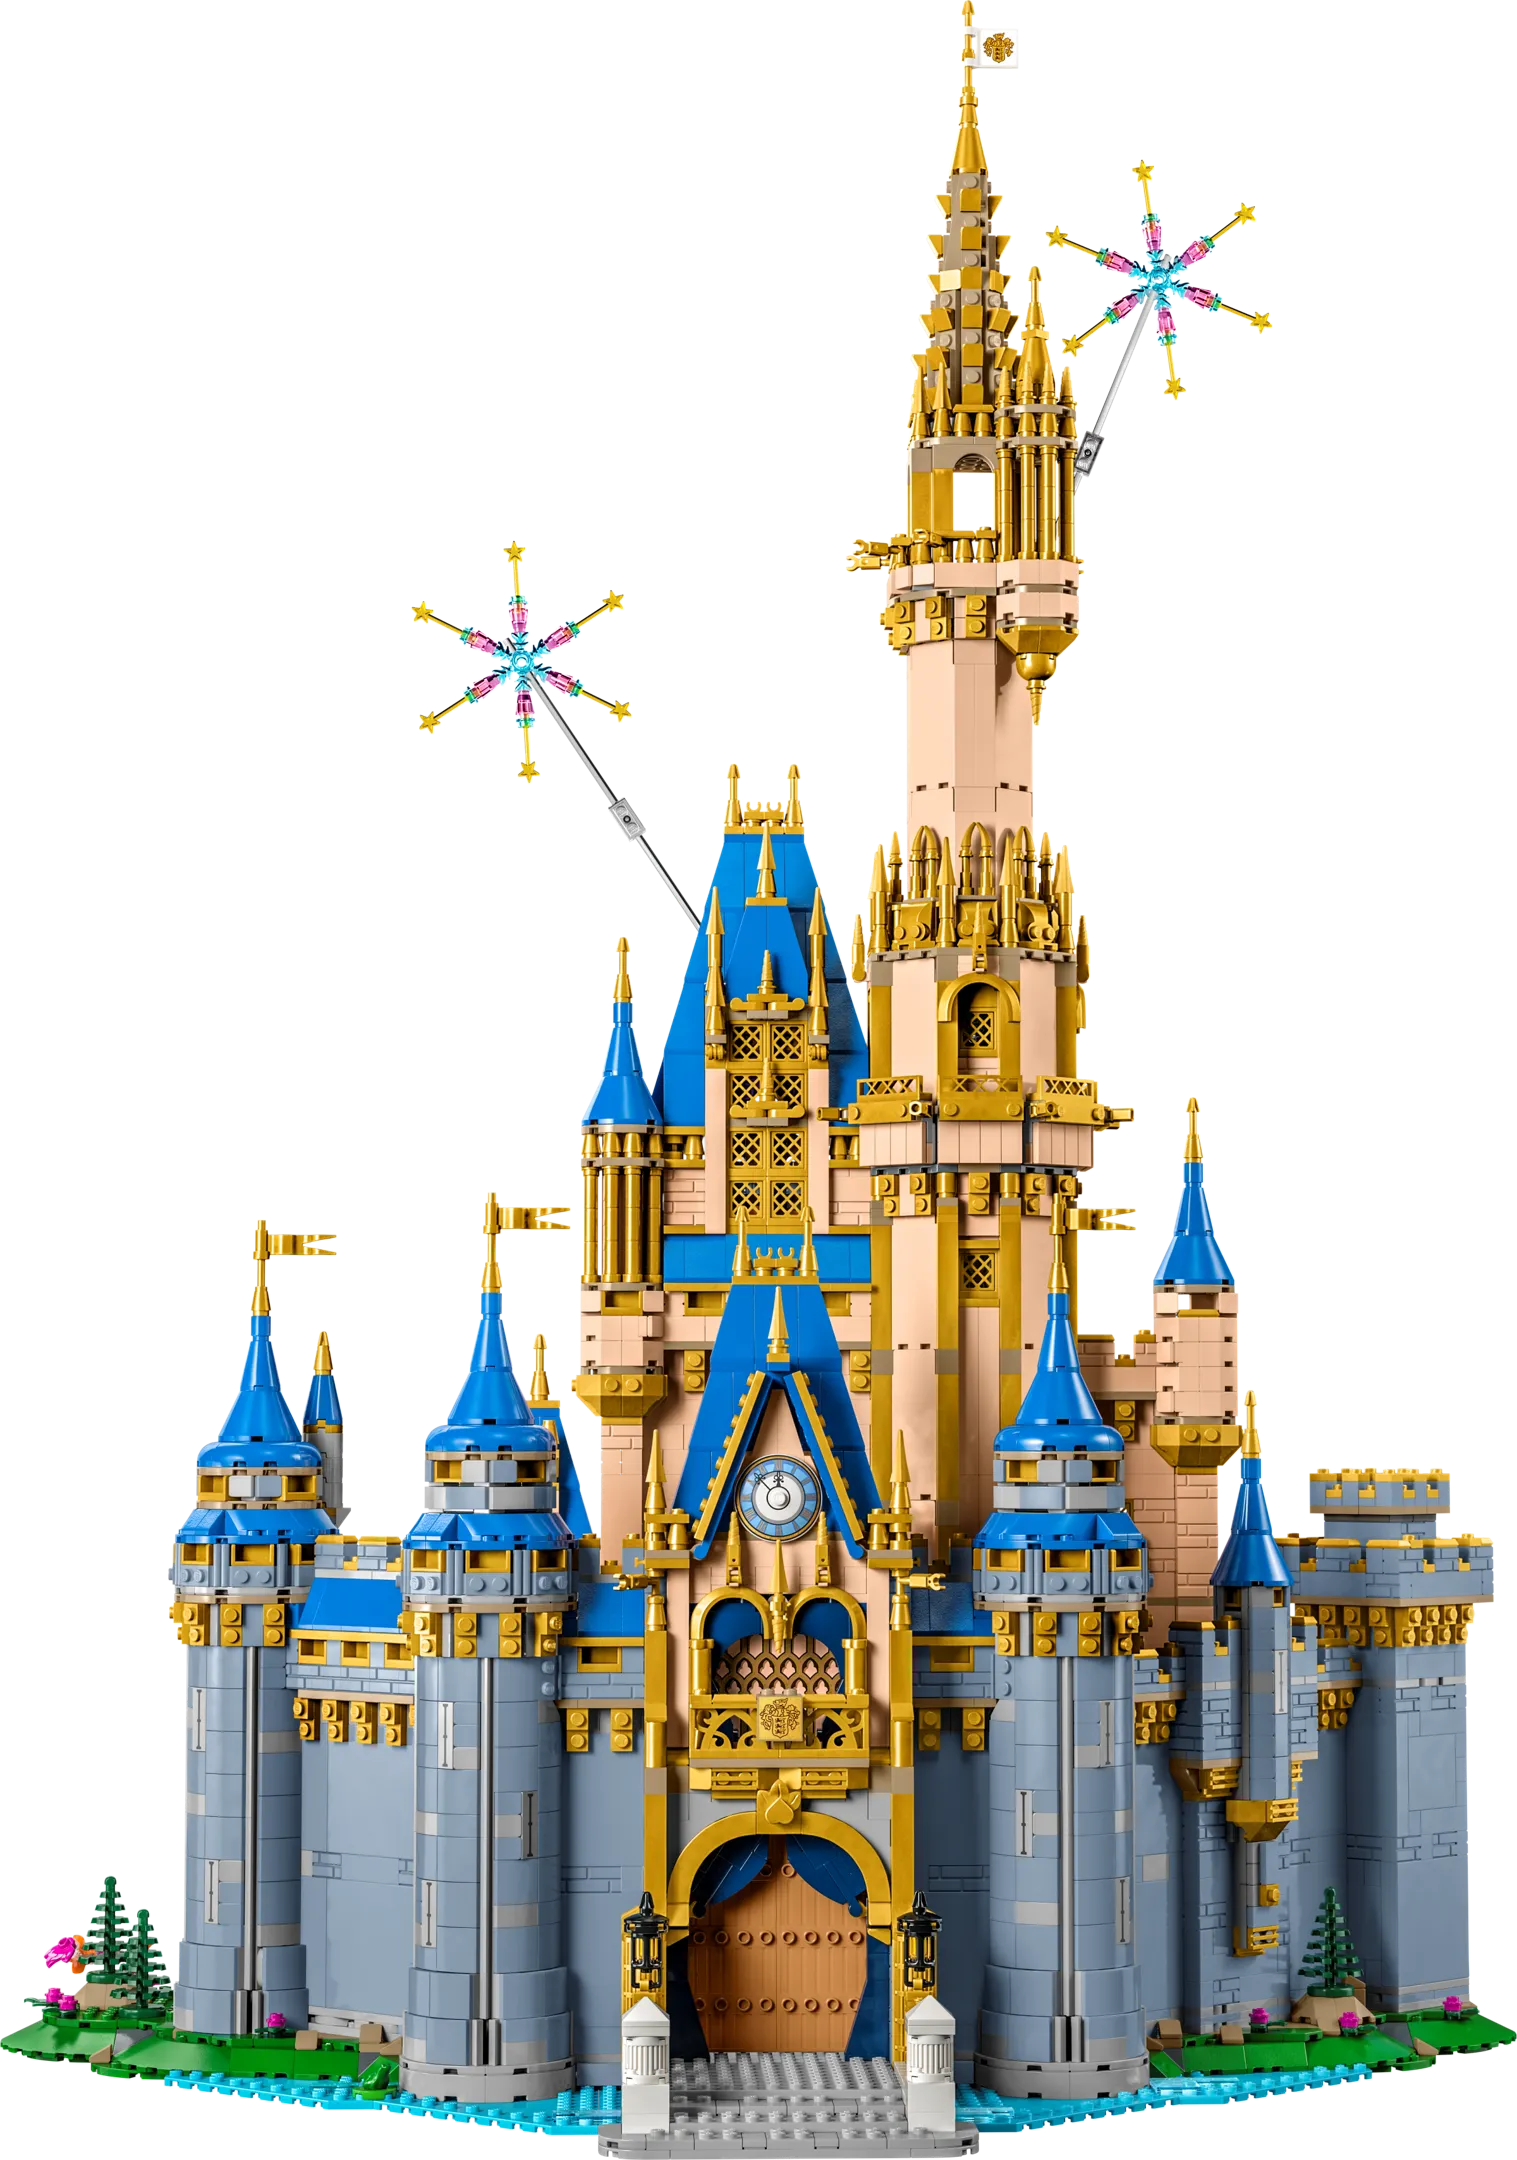 LEGO Disney 100 Minifigures Full Box Contents and Distribution - Jay's  Brick Blog